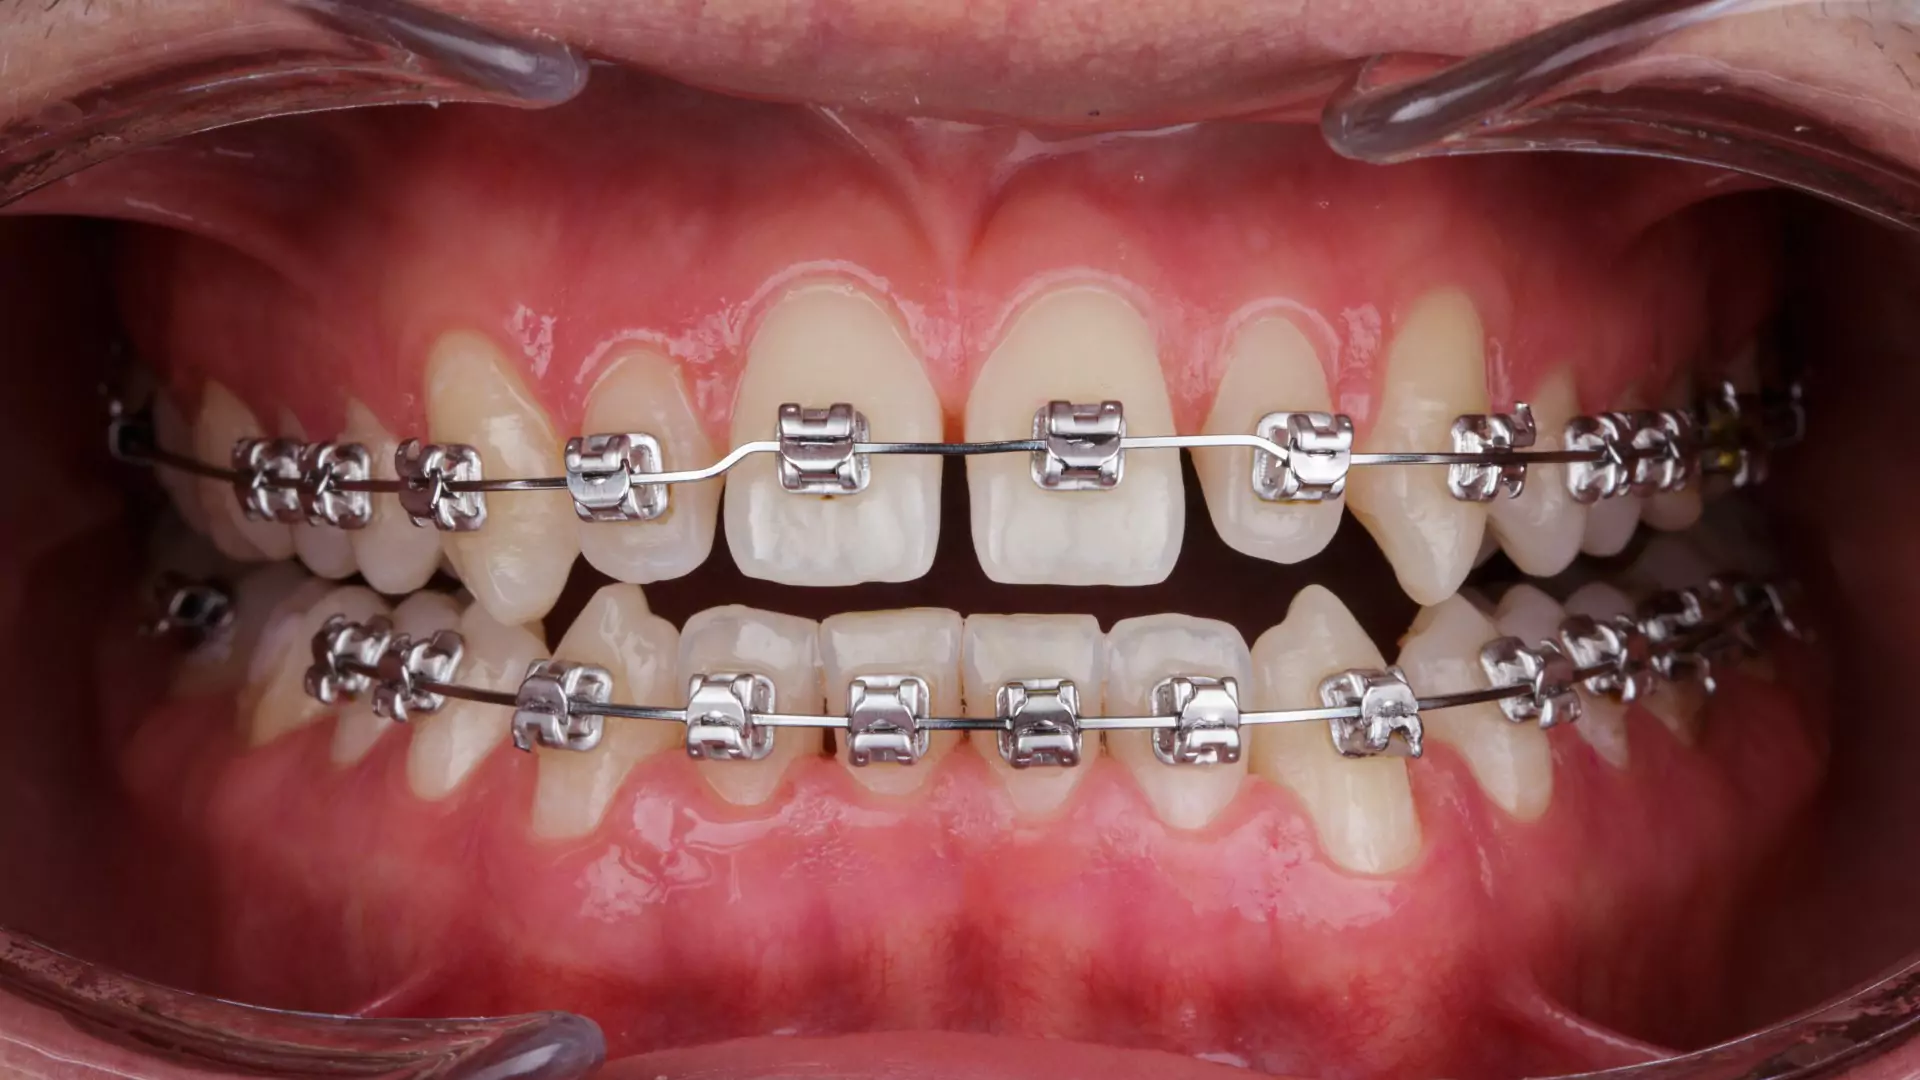 Metal and Ceramic Braces - Lucid Dental Pune